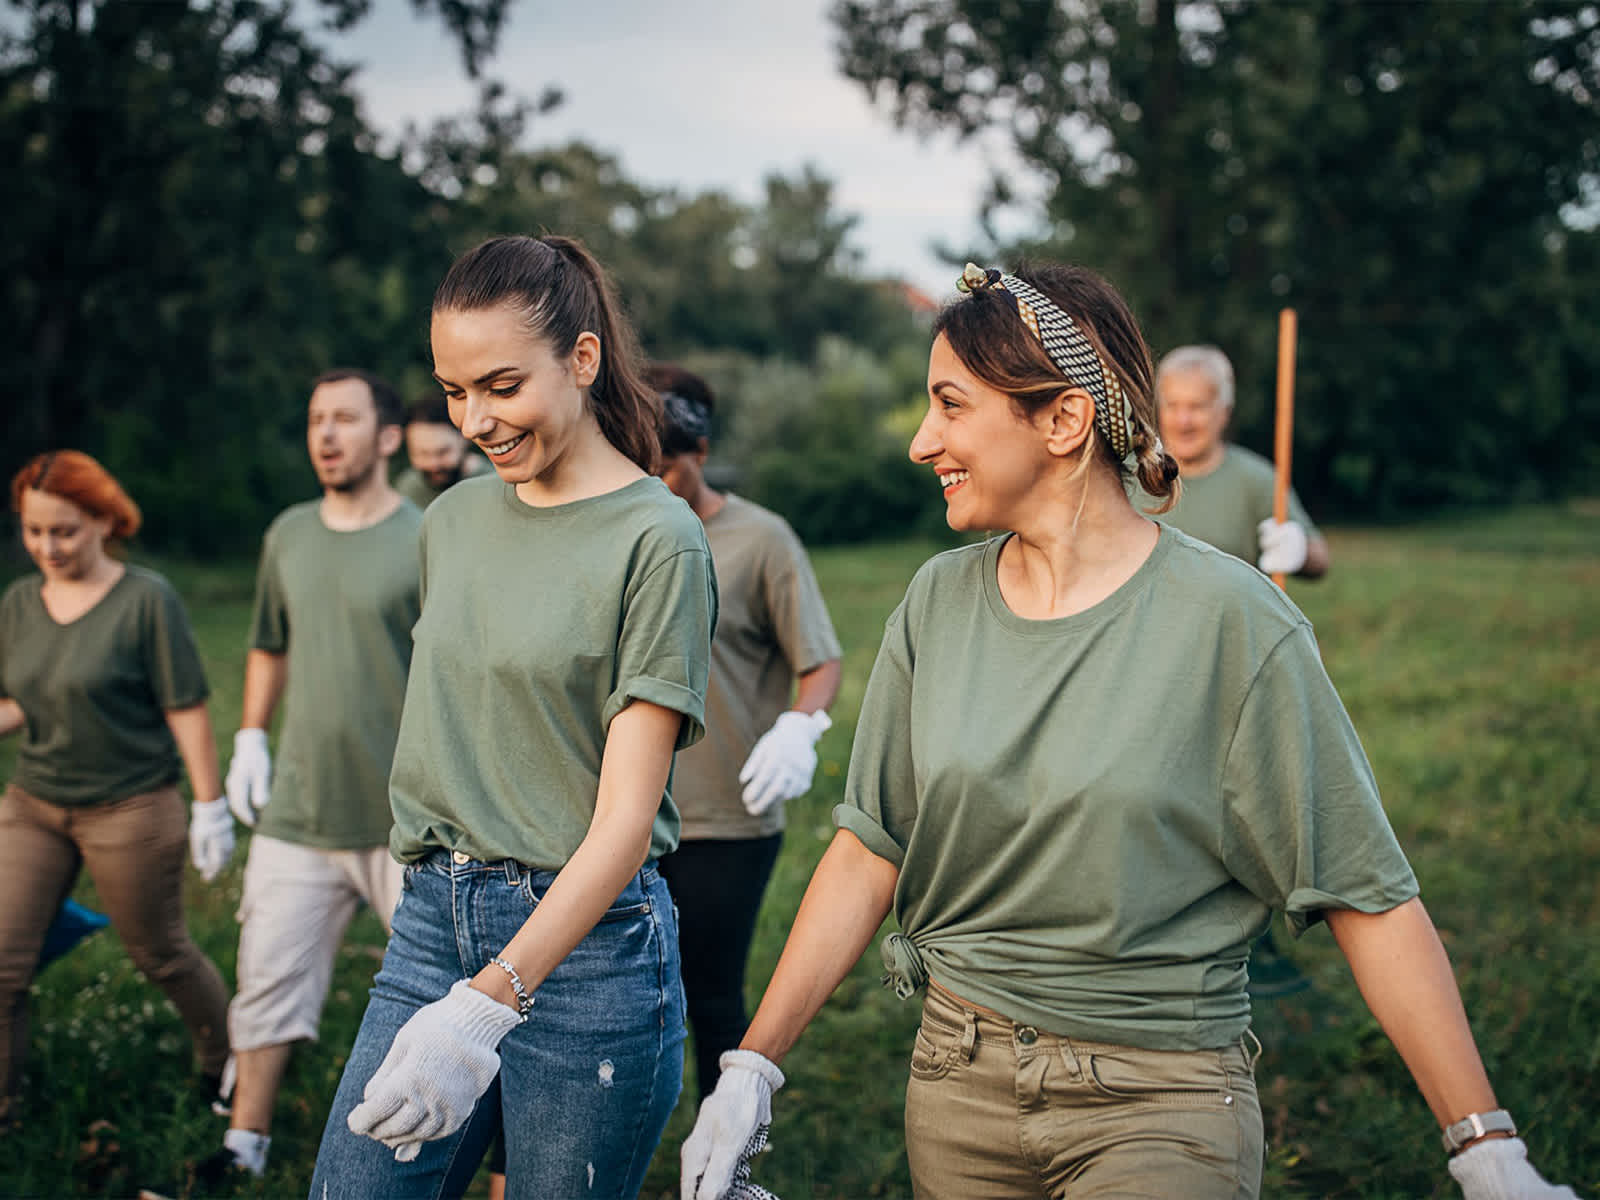 Volunteers in green shirts doing garden work walking through a field.